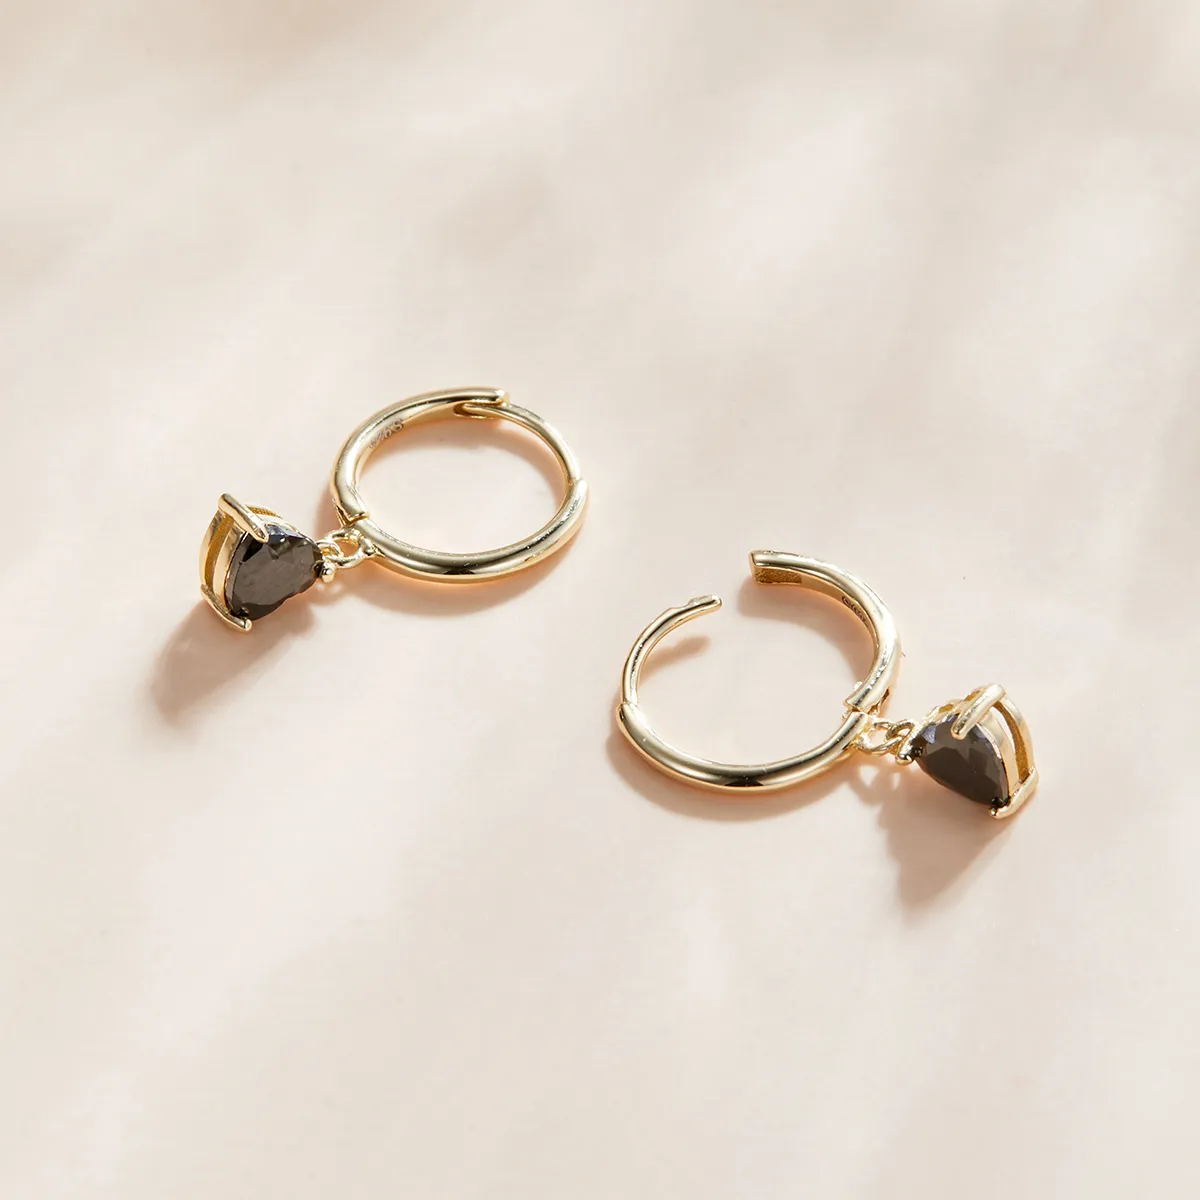 Pandora Style 18ct Gold Plated Heart Drop Dangle Earrings - SCE1019-BK